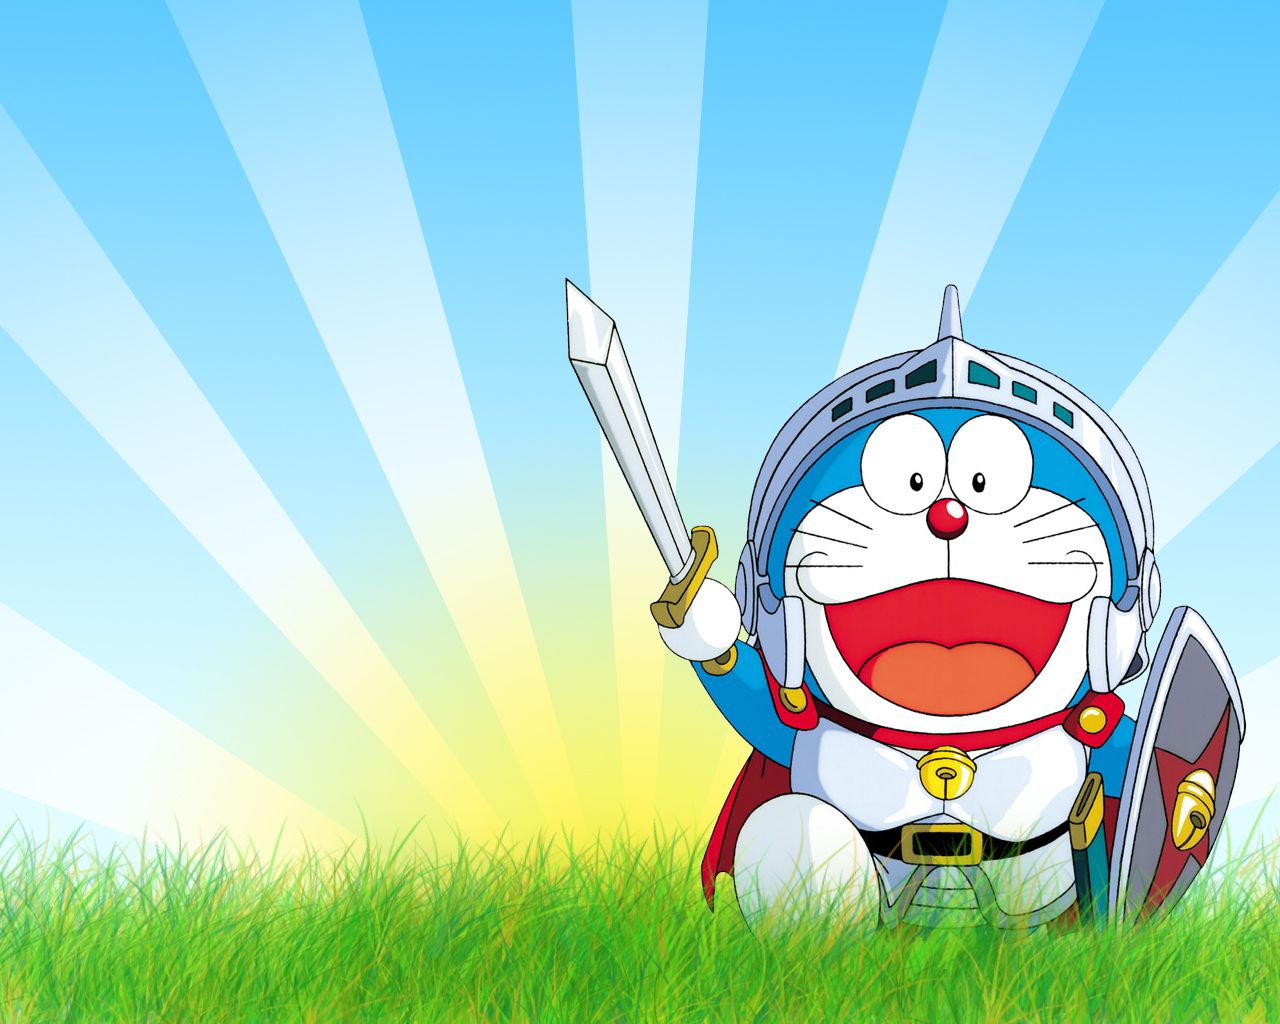 PTI wants Japanese cartoon series 'Doraemon' banned - Pakistan - DAWN.COM